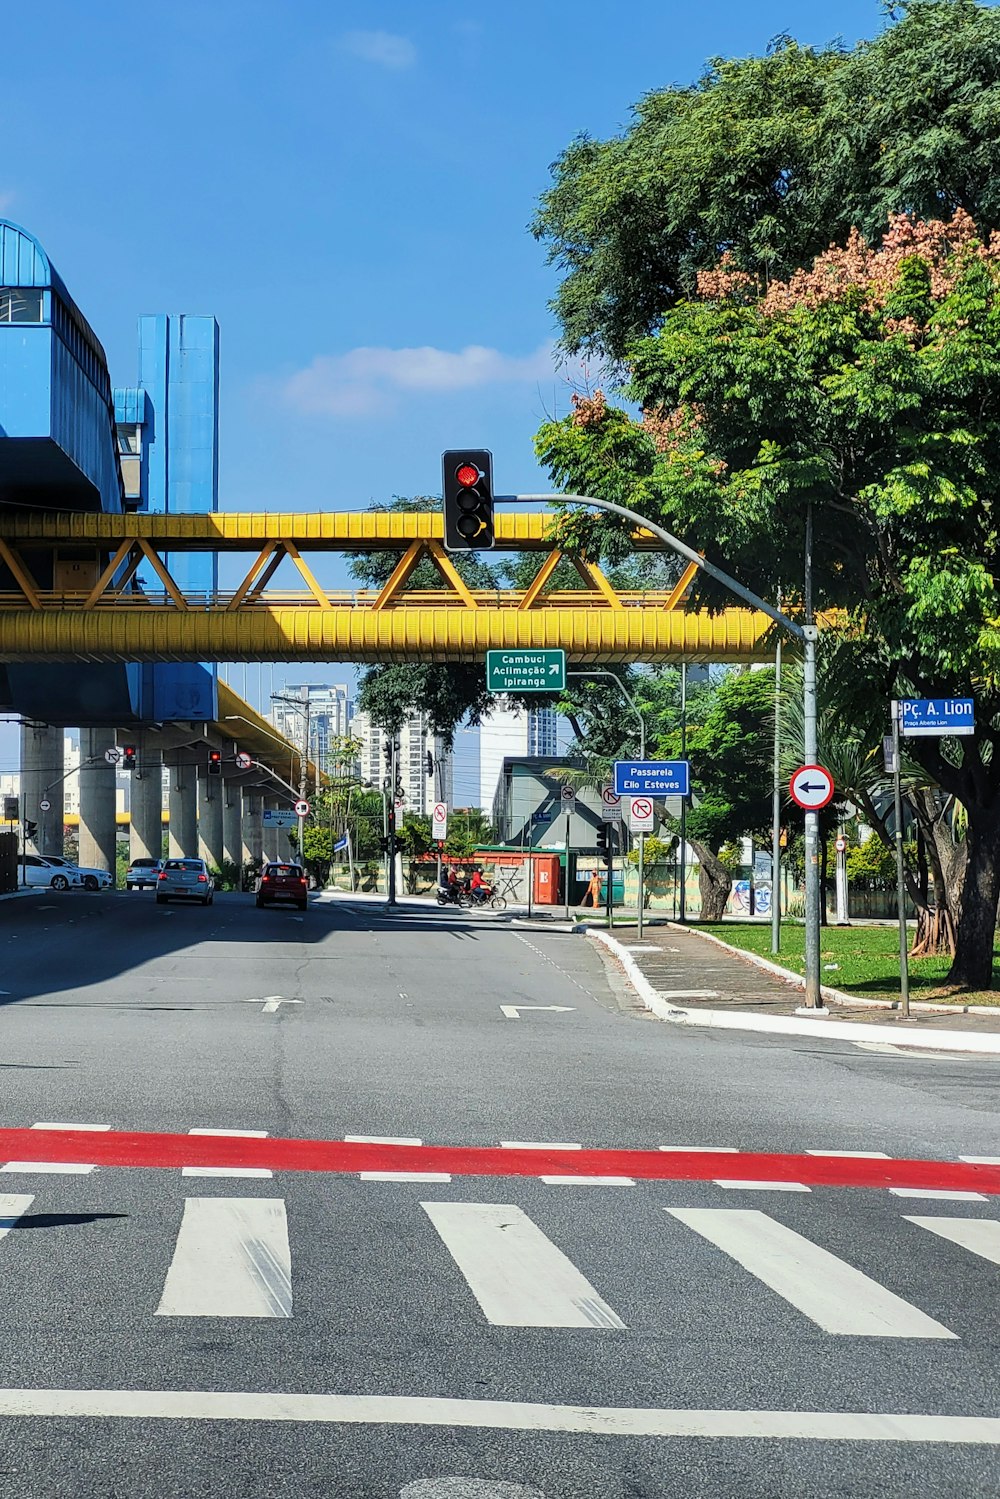 a traffic light on a yellow bridge over a street